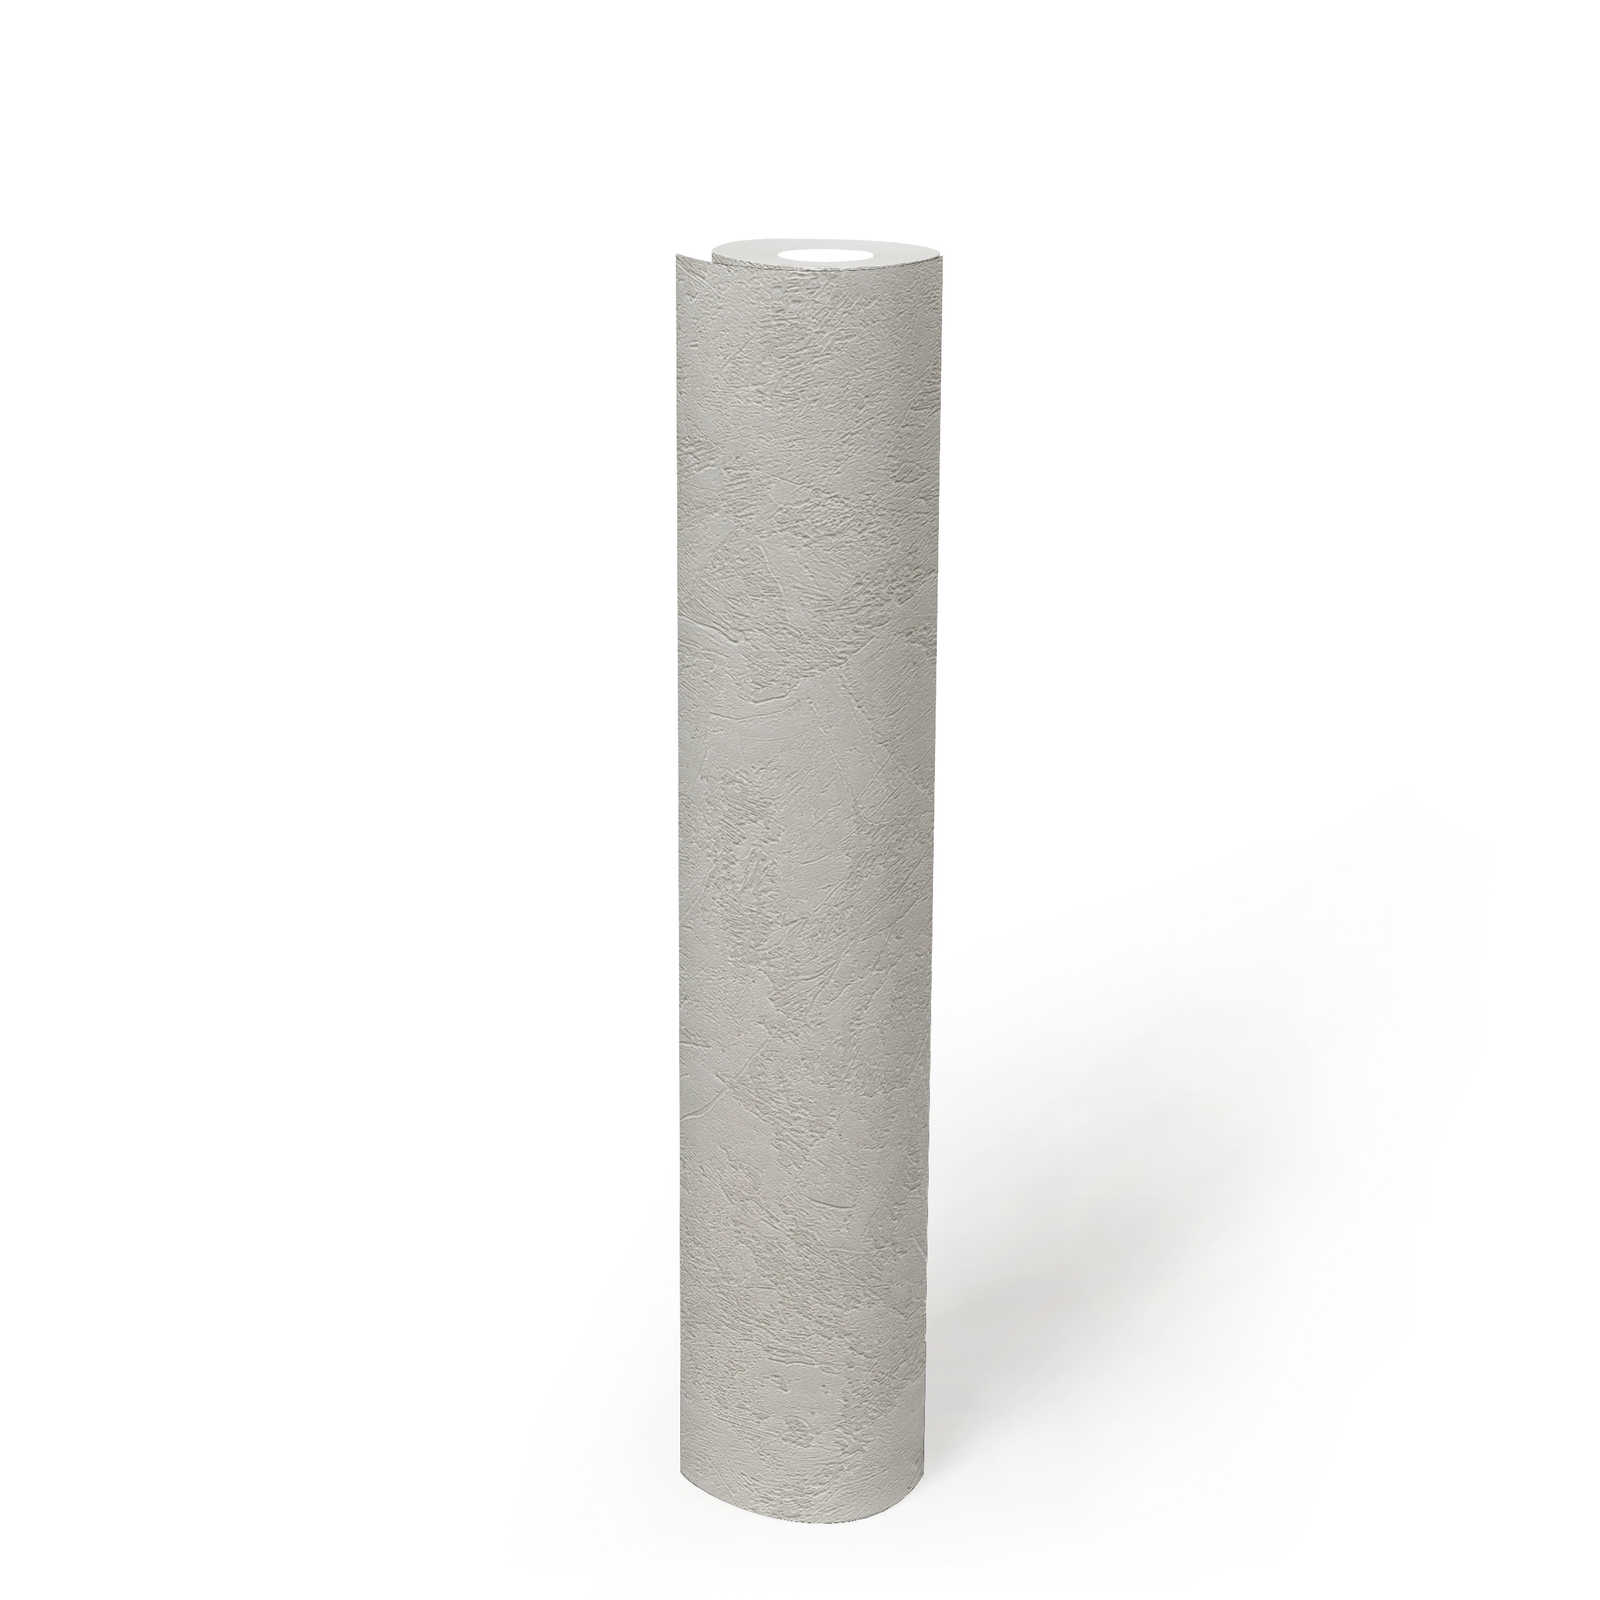             Plaster-effect plain textured wallpaper with glitter effect - grey
        